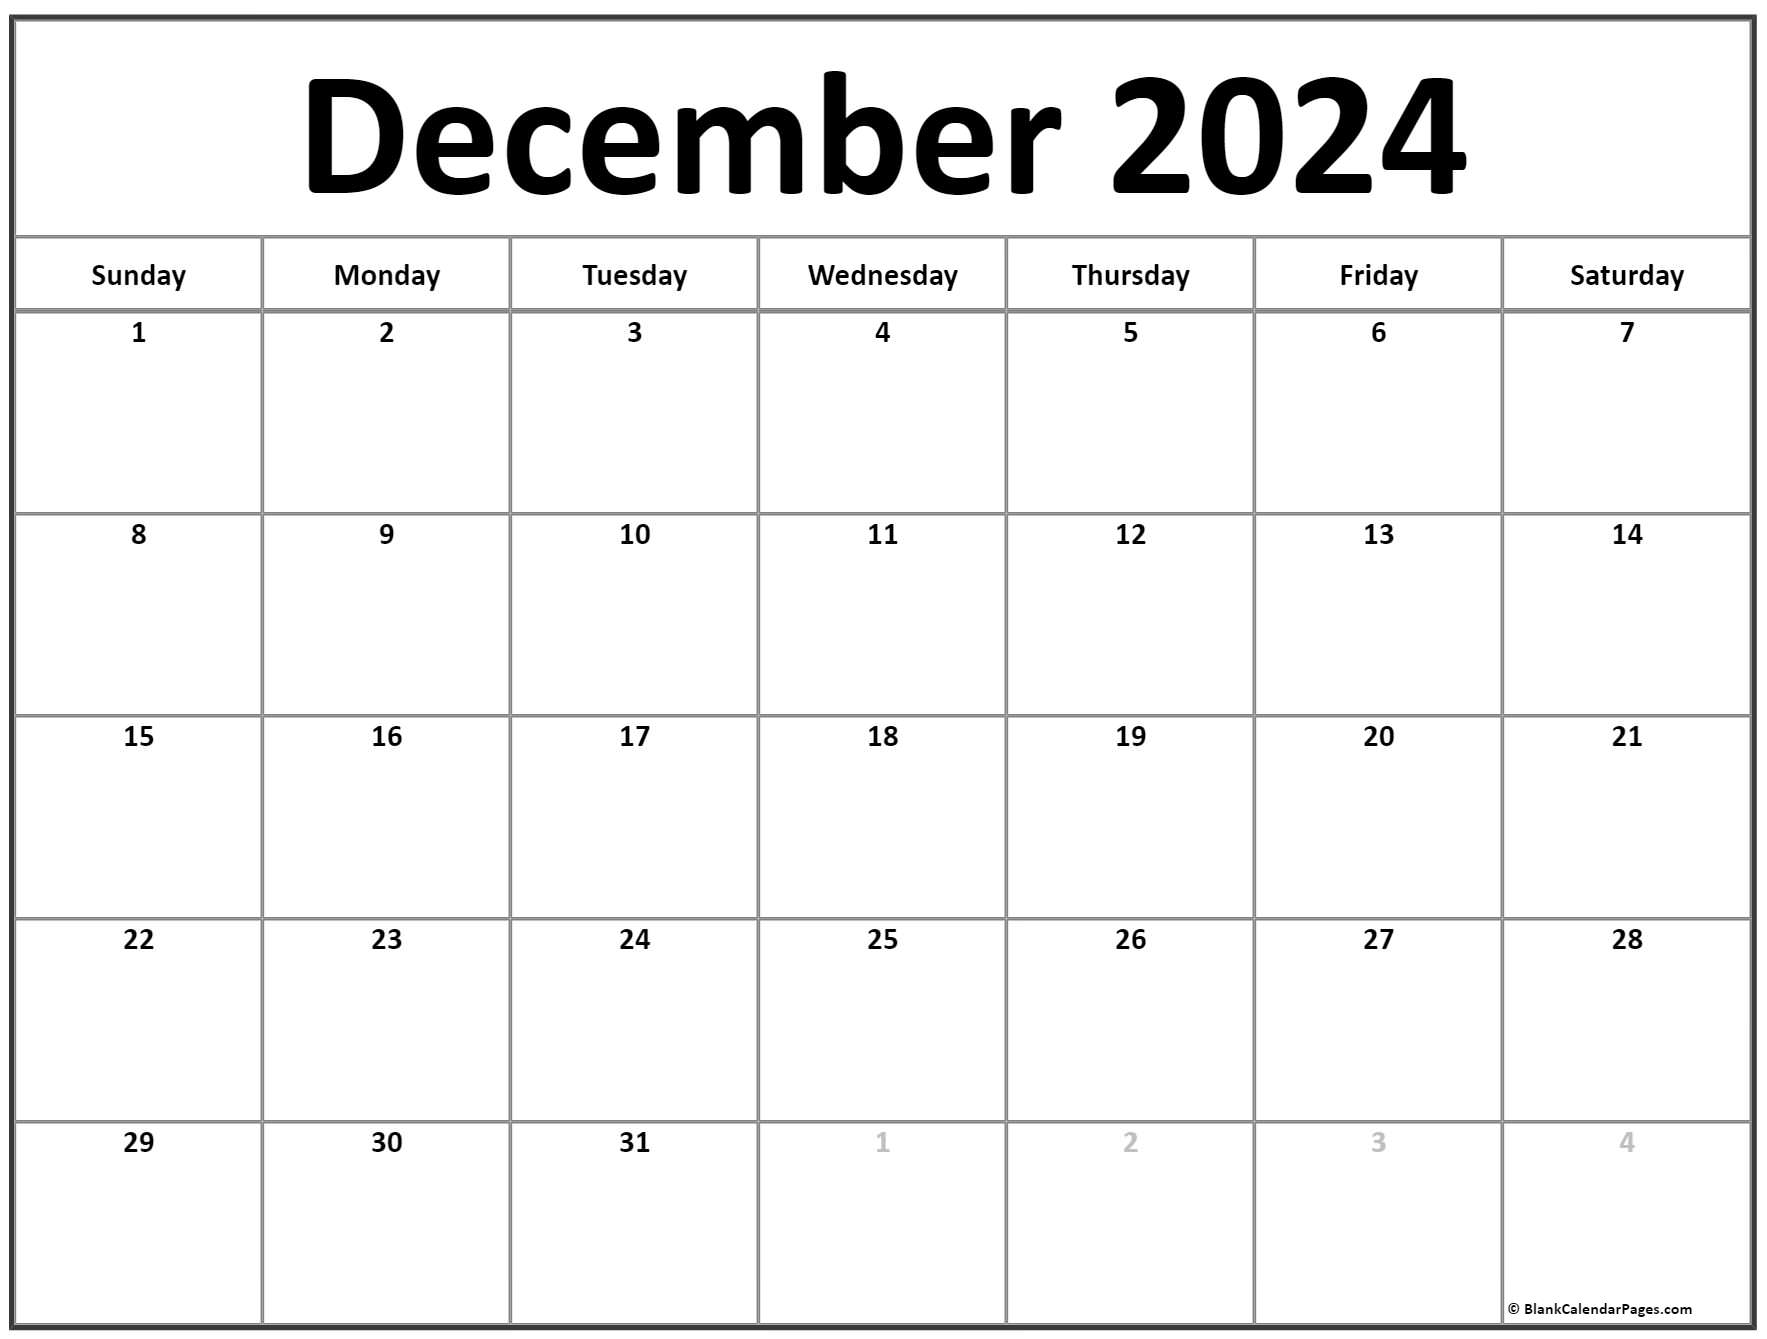 november-2022-blank-calendar-pages